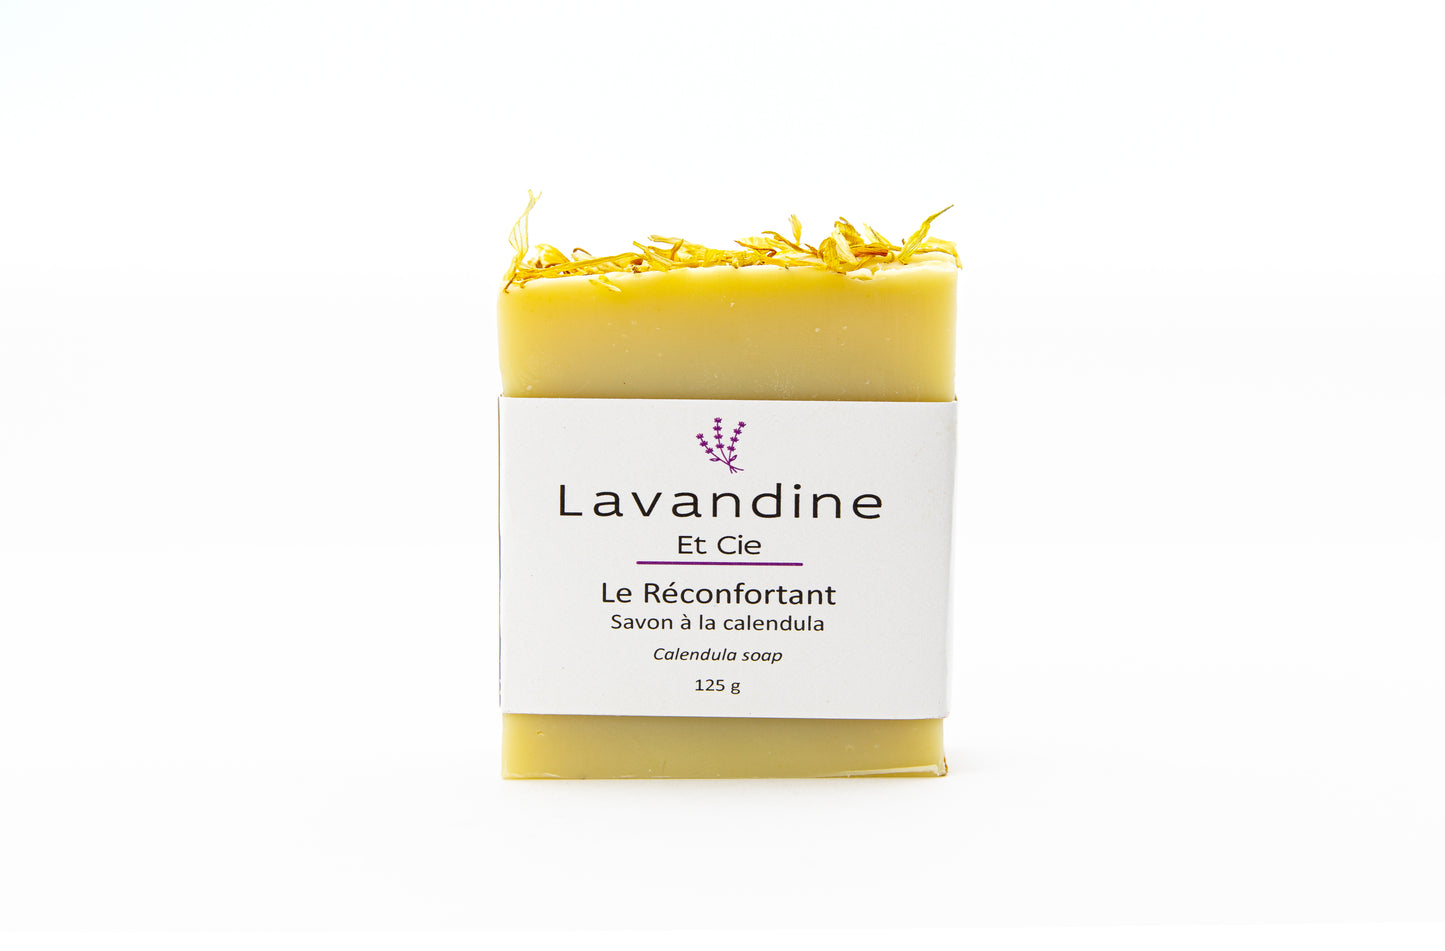 Le Confortant - Lavender and calendula soap